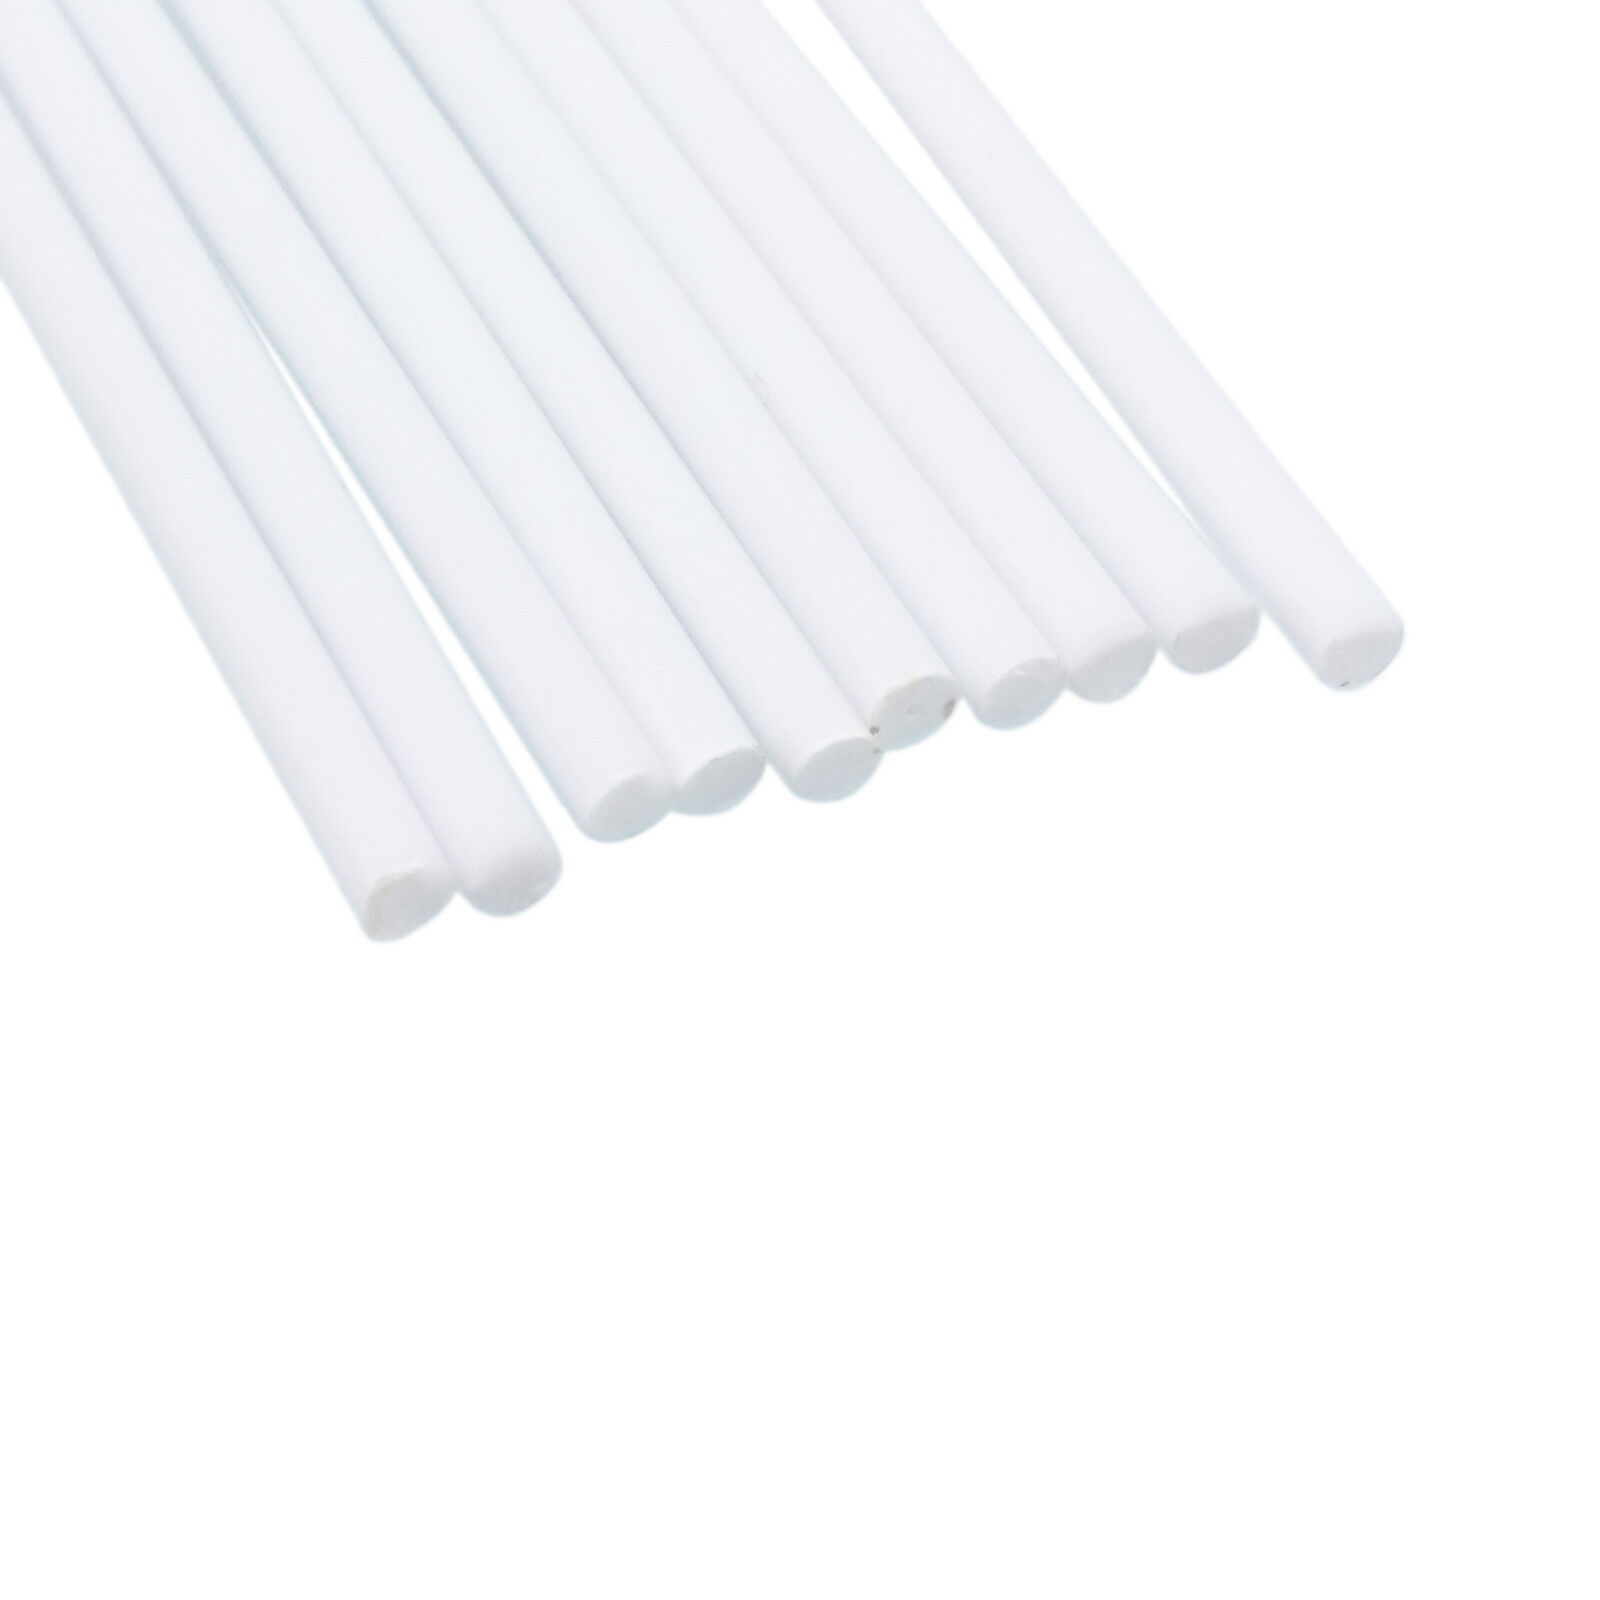 4x4x250mm 3x3 10pcs White ABS Plastic L Shape Right Angle Bars DIY Model 2X2 